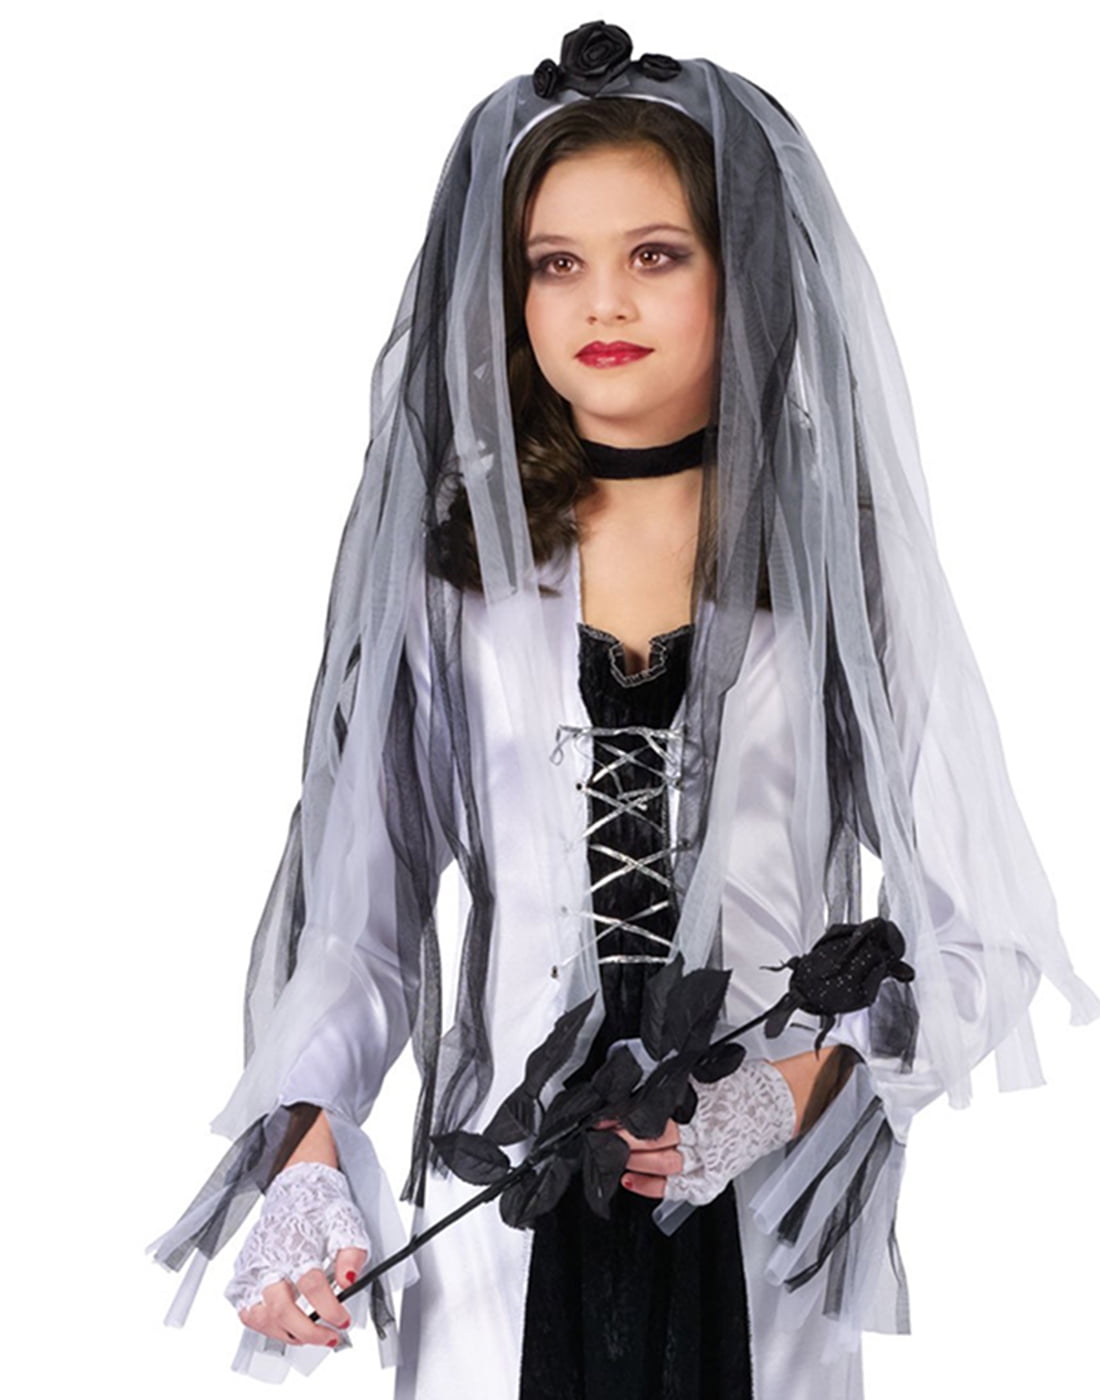 Megartico Women Halloween Ghost Bride Dress Gothic Skeleton-Printed Dress with Veil Costume